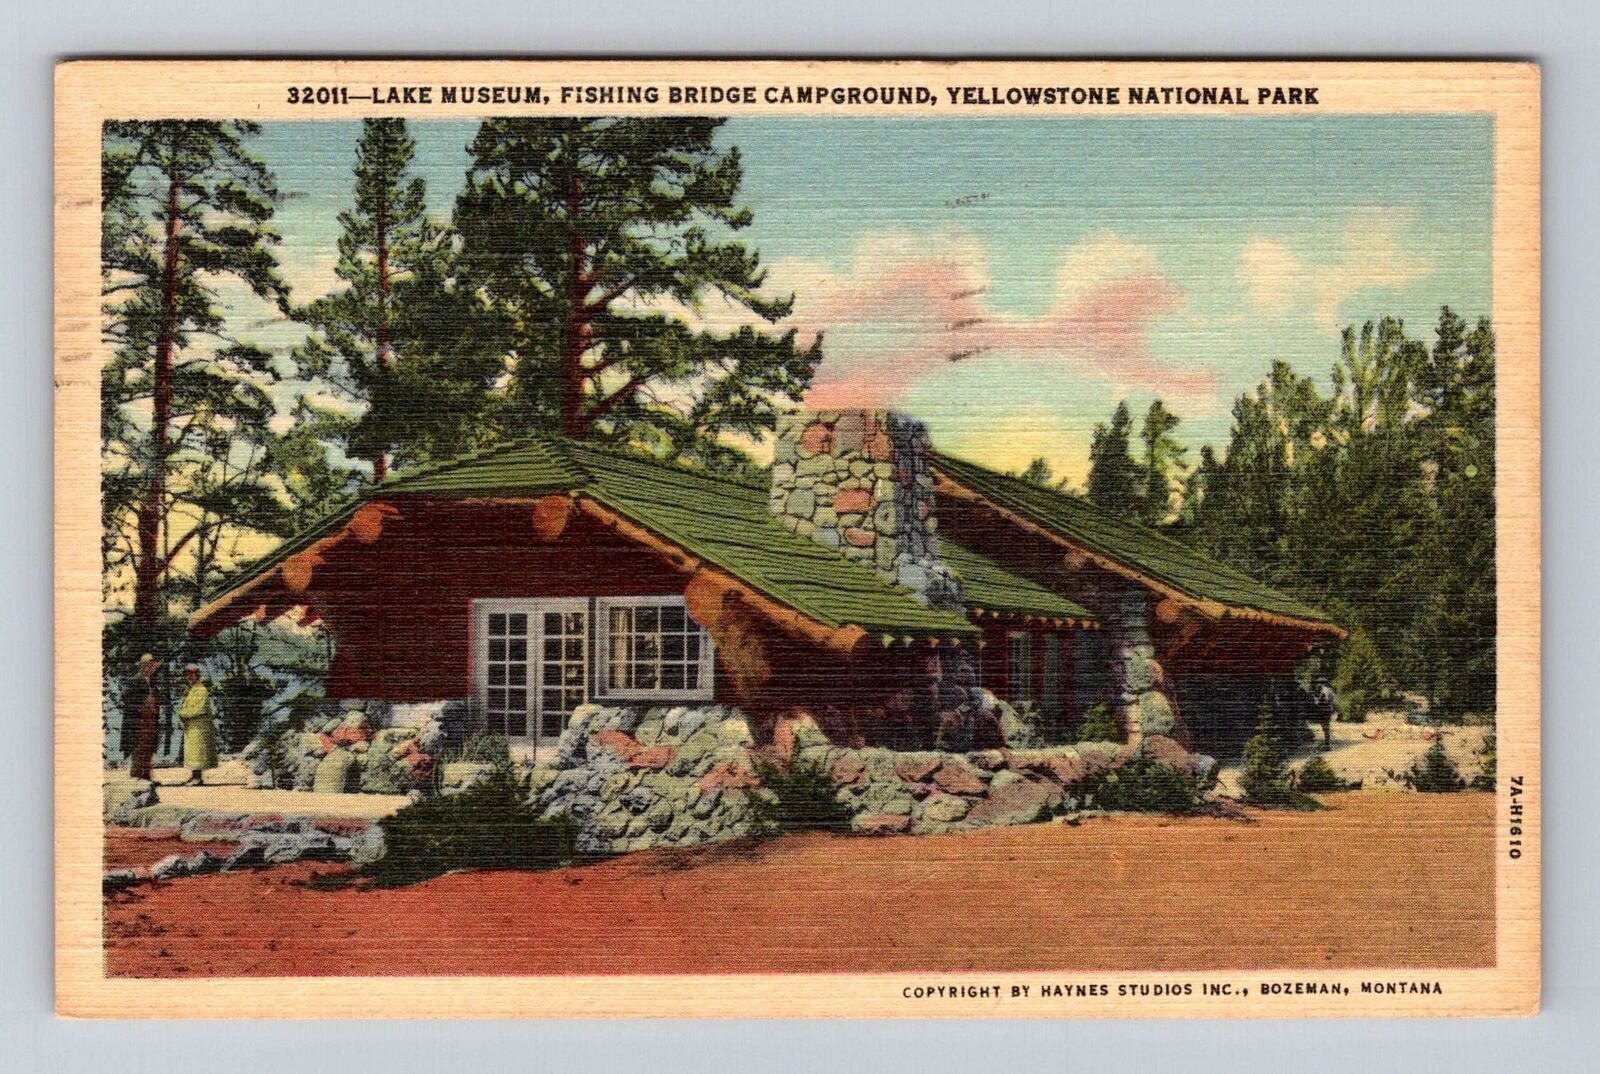 Yellowstone National Park, Lake Museum, Series #32011 Vintage Souvenir Postcard